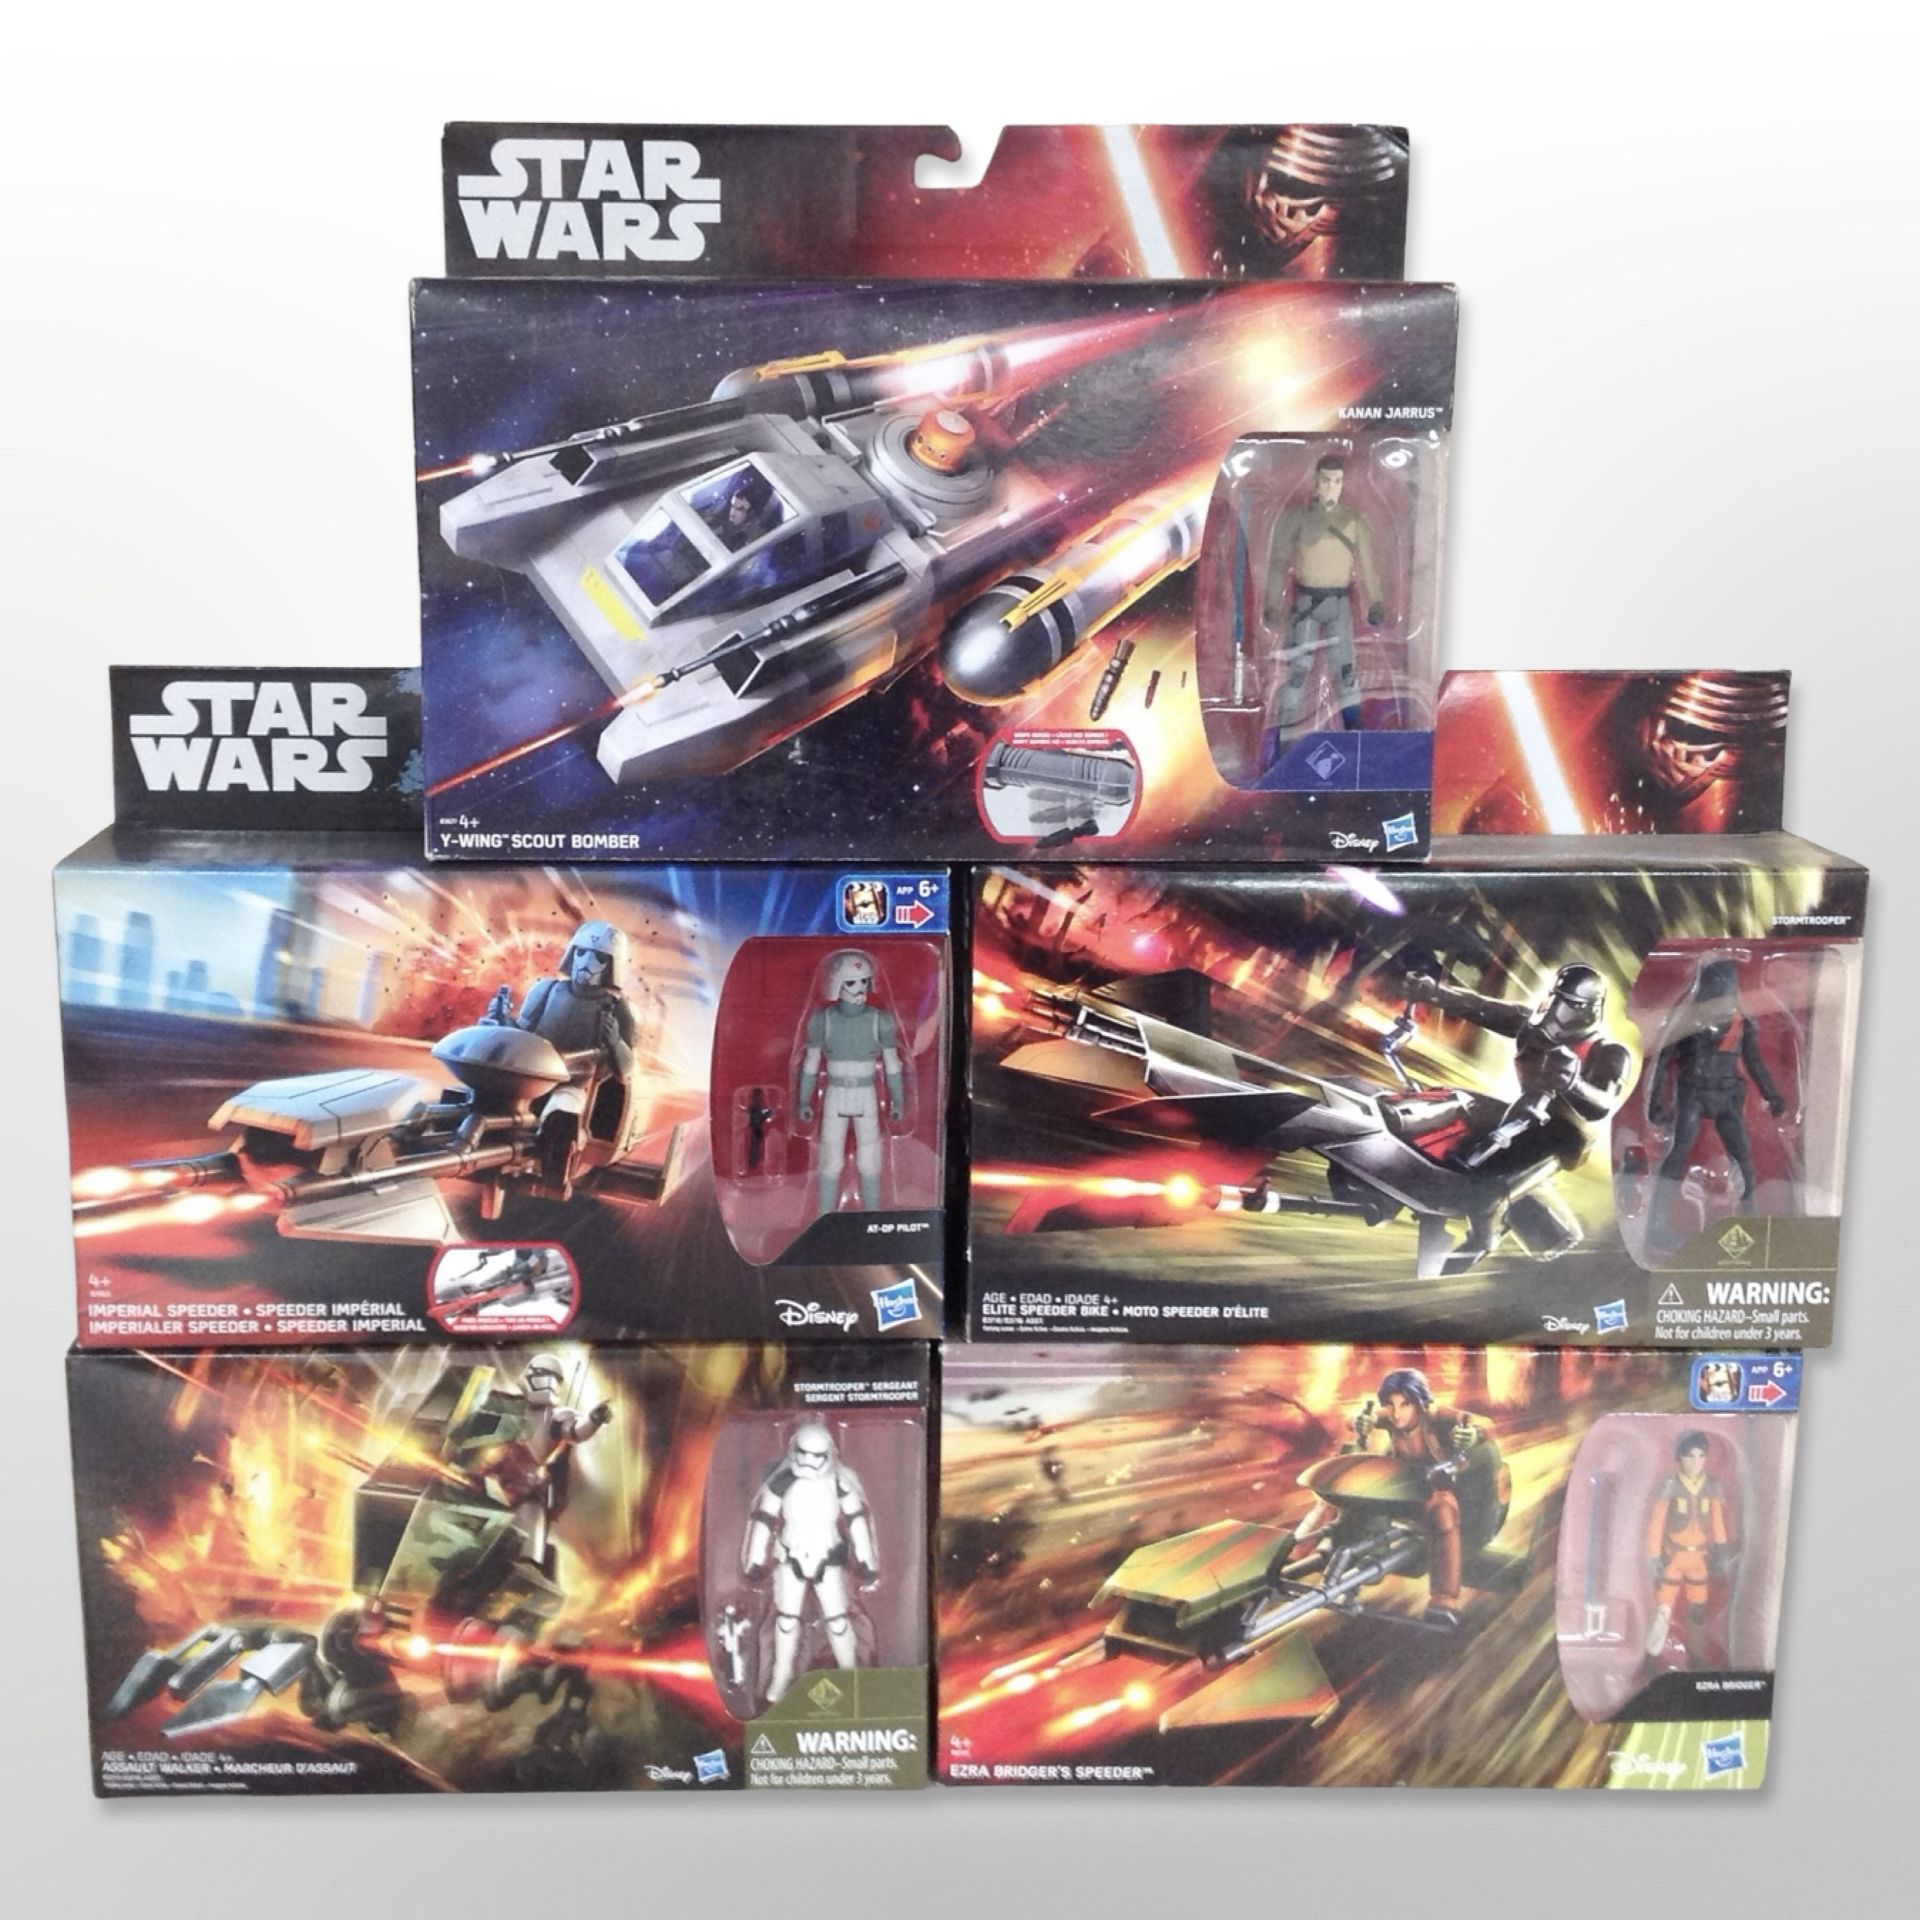 Five Hasbro Disney Star Wars figures including Assault Walker, Elite Speeder Bike, Imperial Speeder,